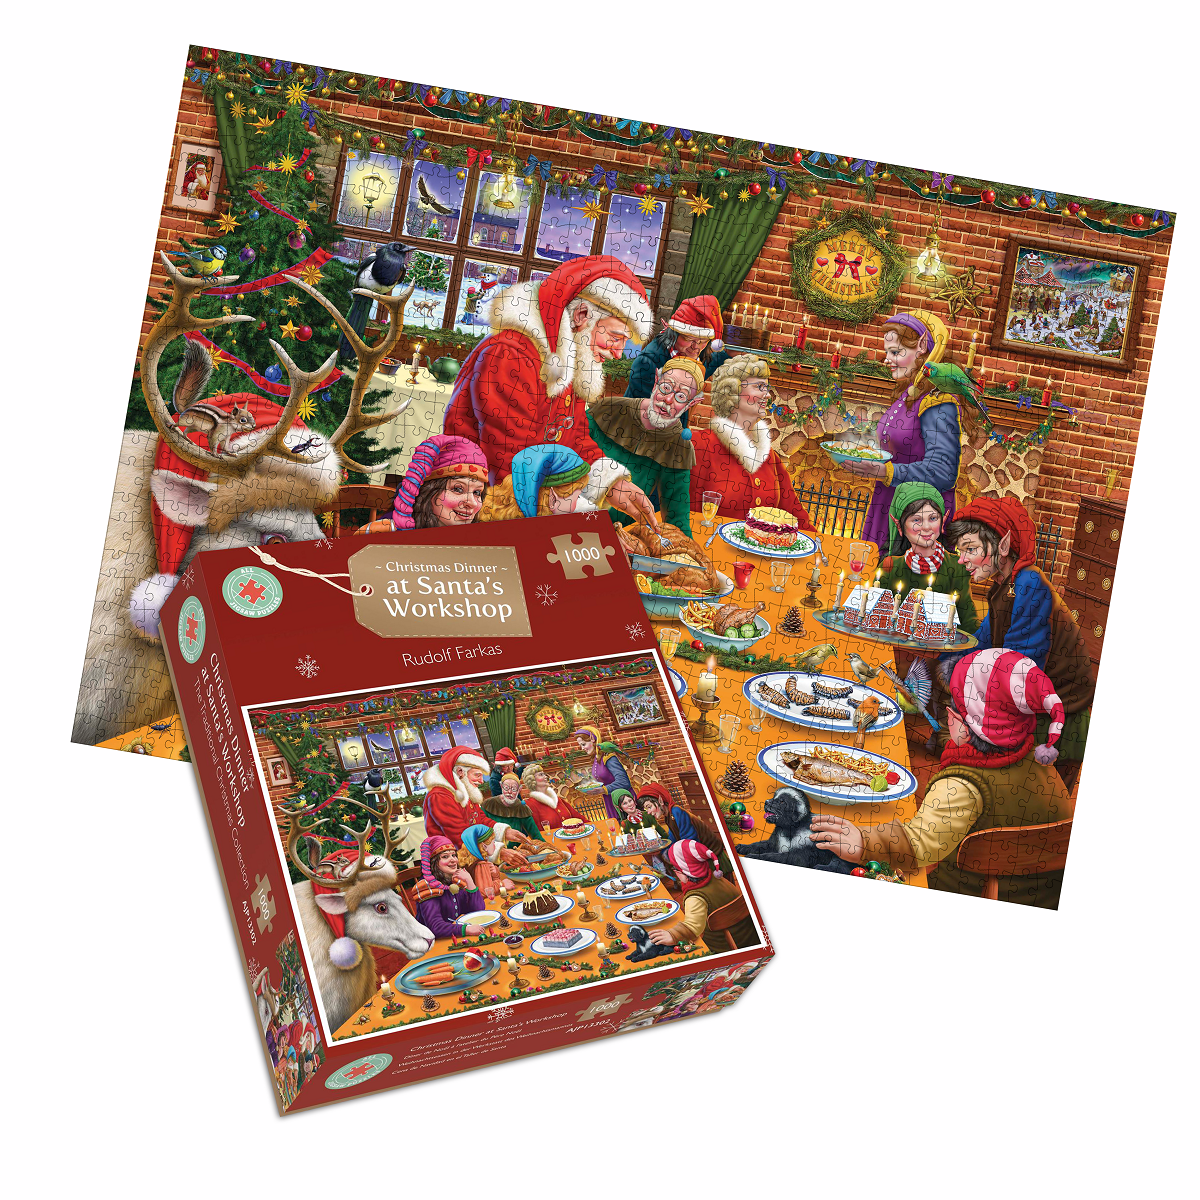 Santa's Workshop - Ravensburger Limited Edition 1000 Piece Jigsaw